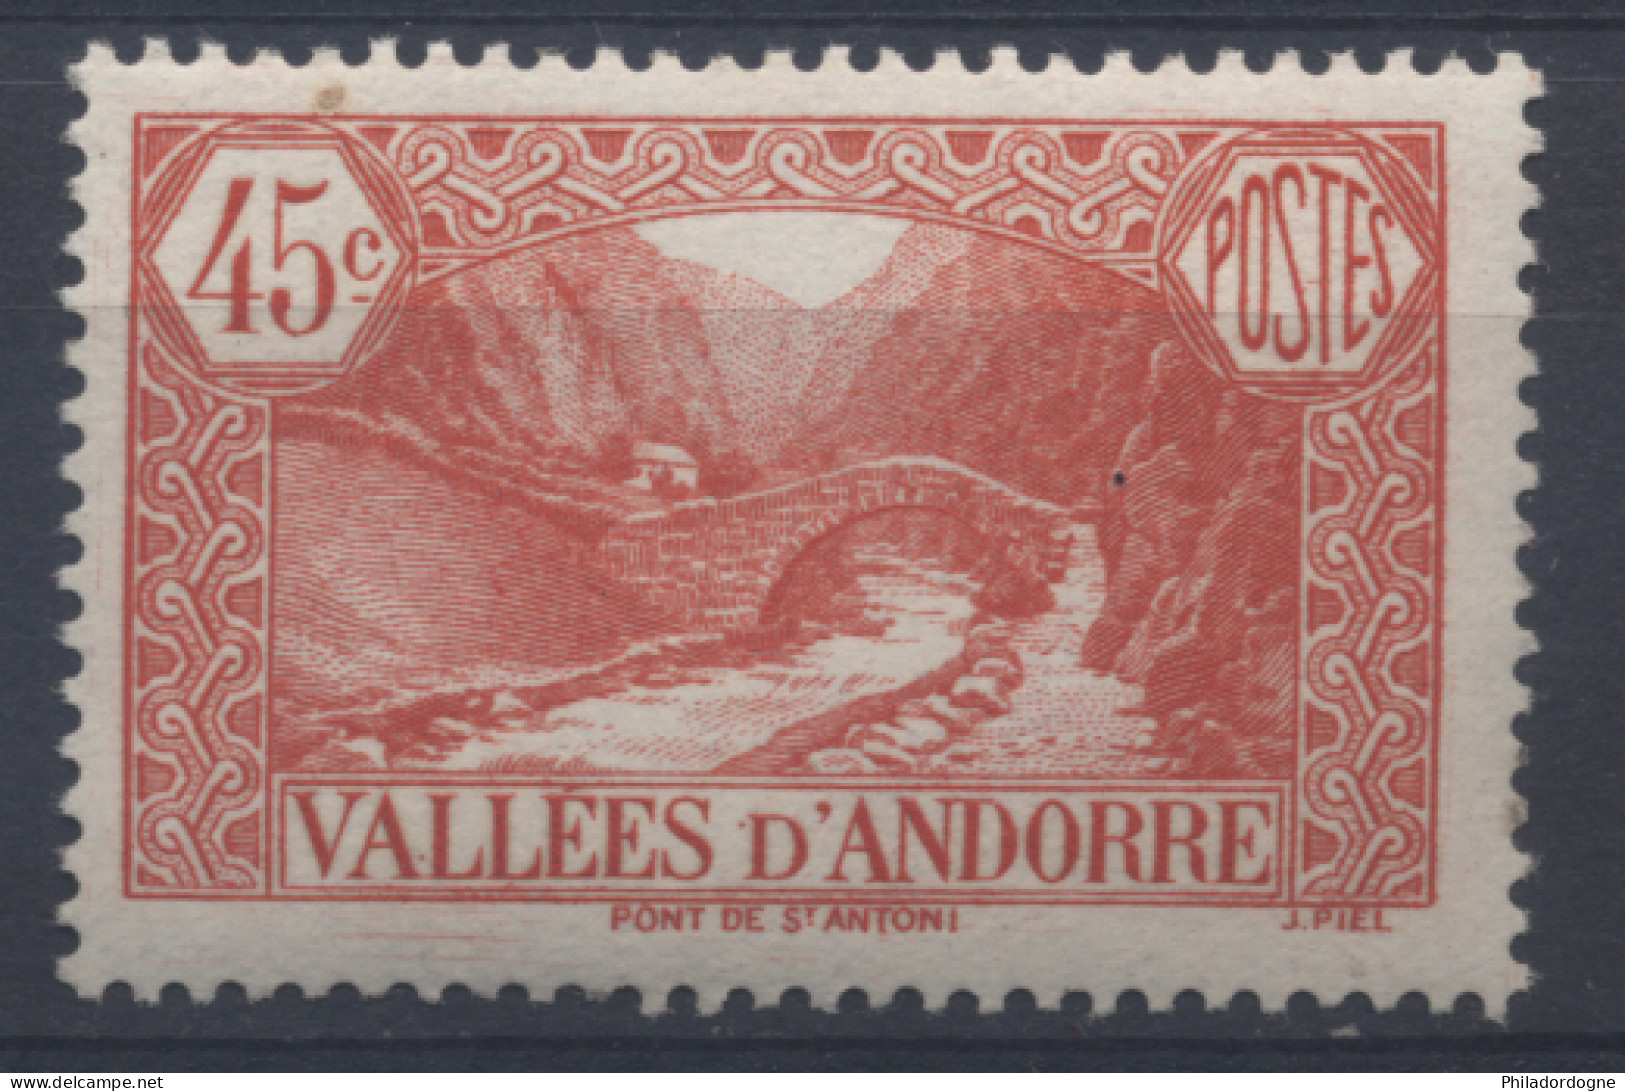 Andorre - Yvert N° 34 Neuf Et Luxe (MNH) - Cote 33 Euros - Nuovi